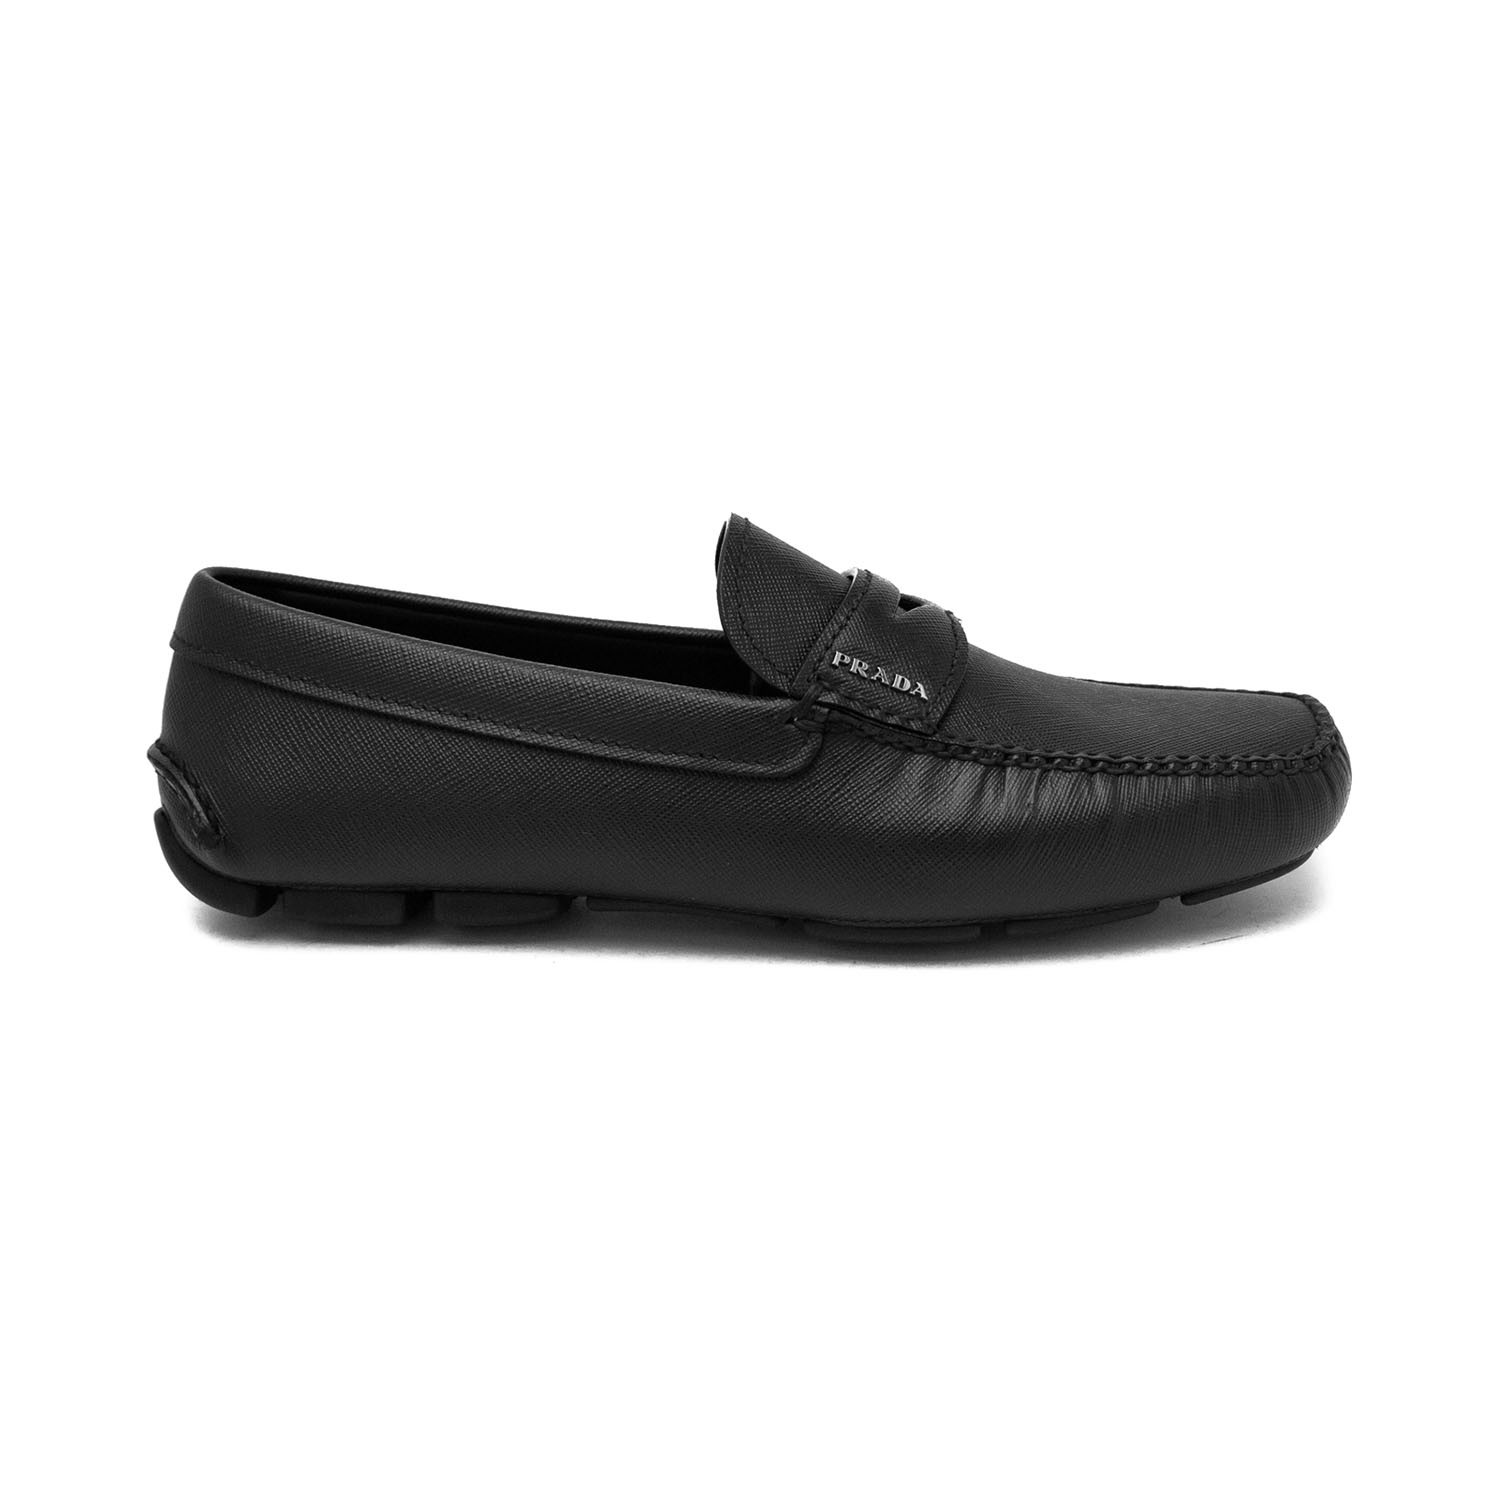 Prada // Men's Saffiano Leather Penny Loafer Shoes // Black (US 7 ...